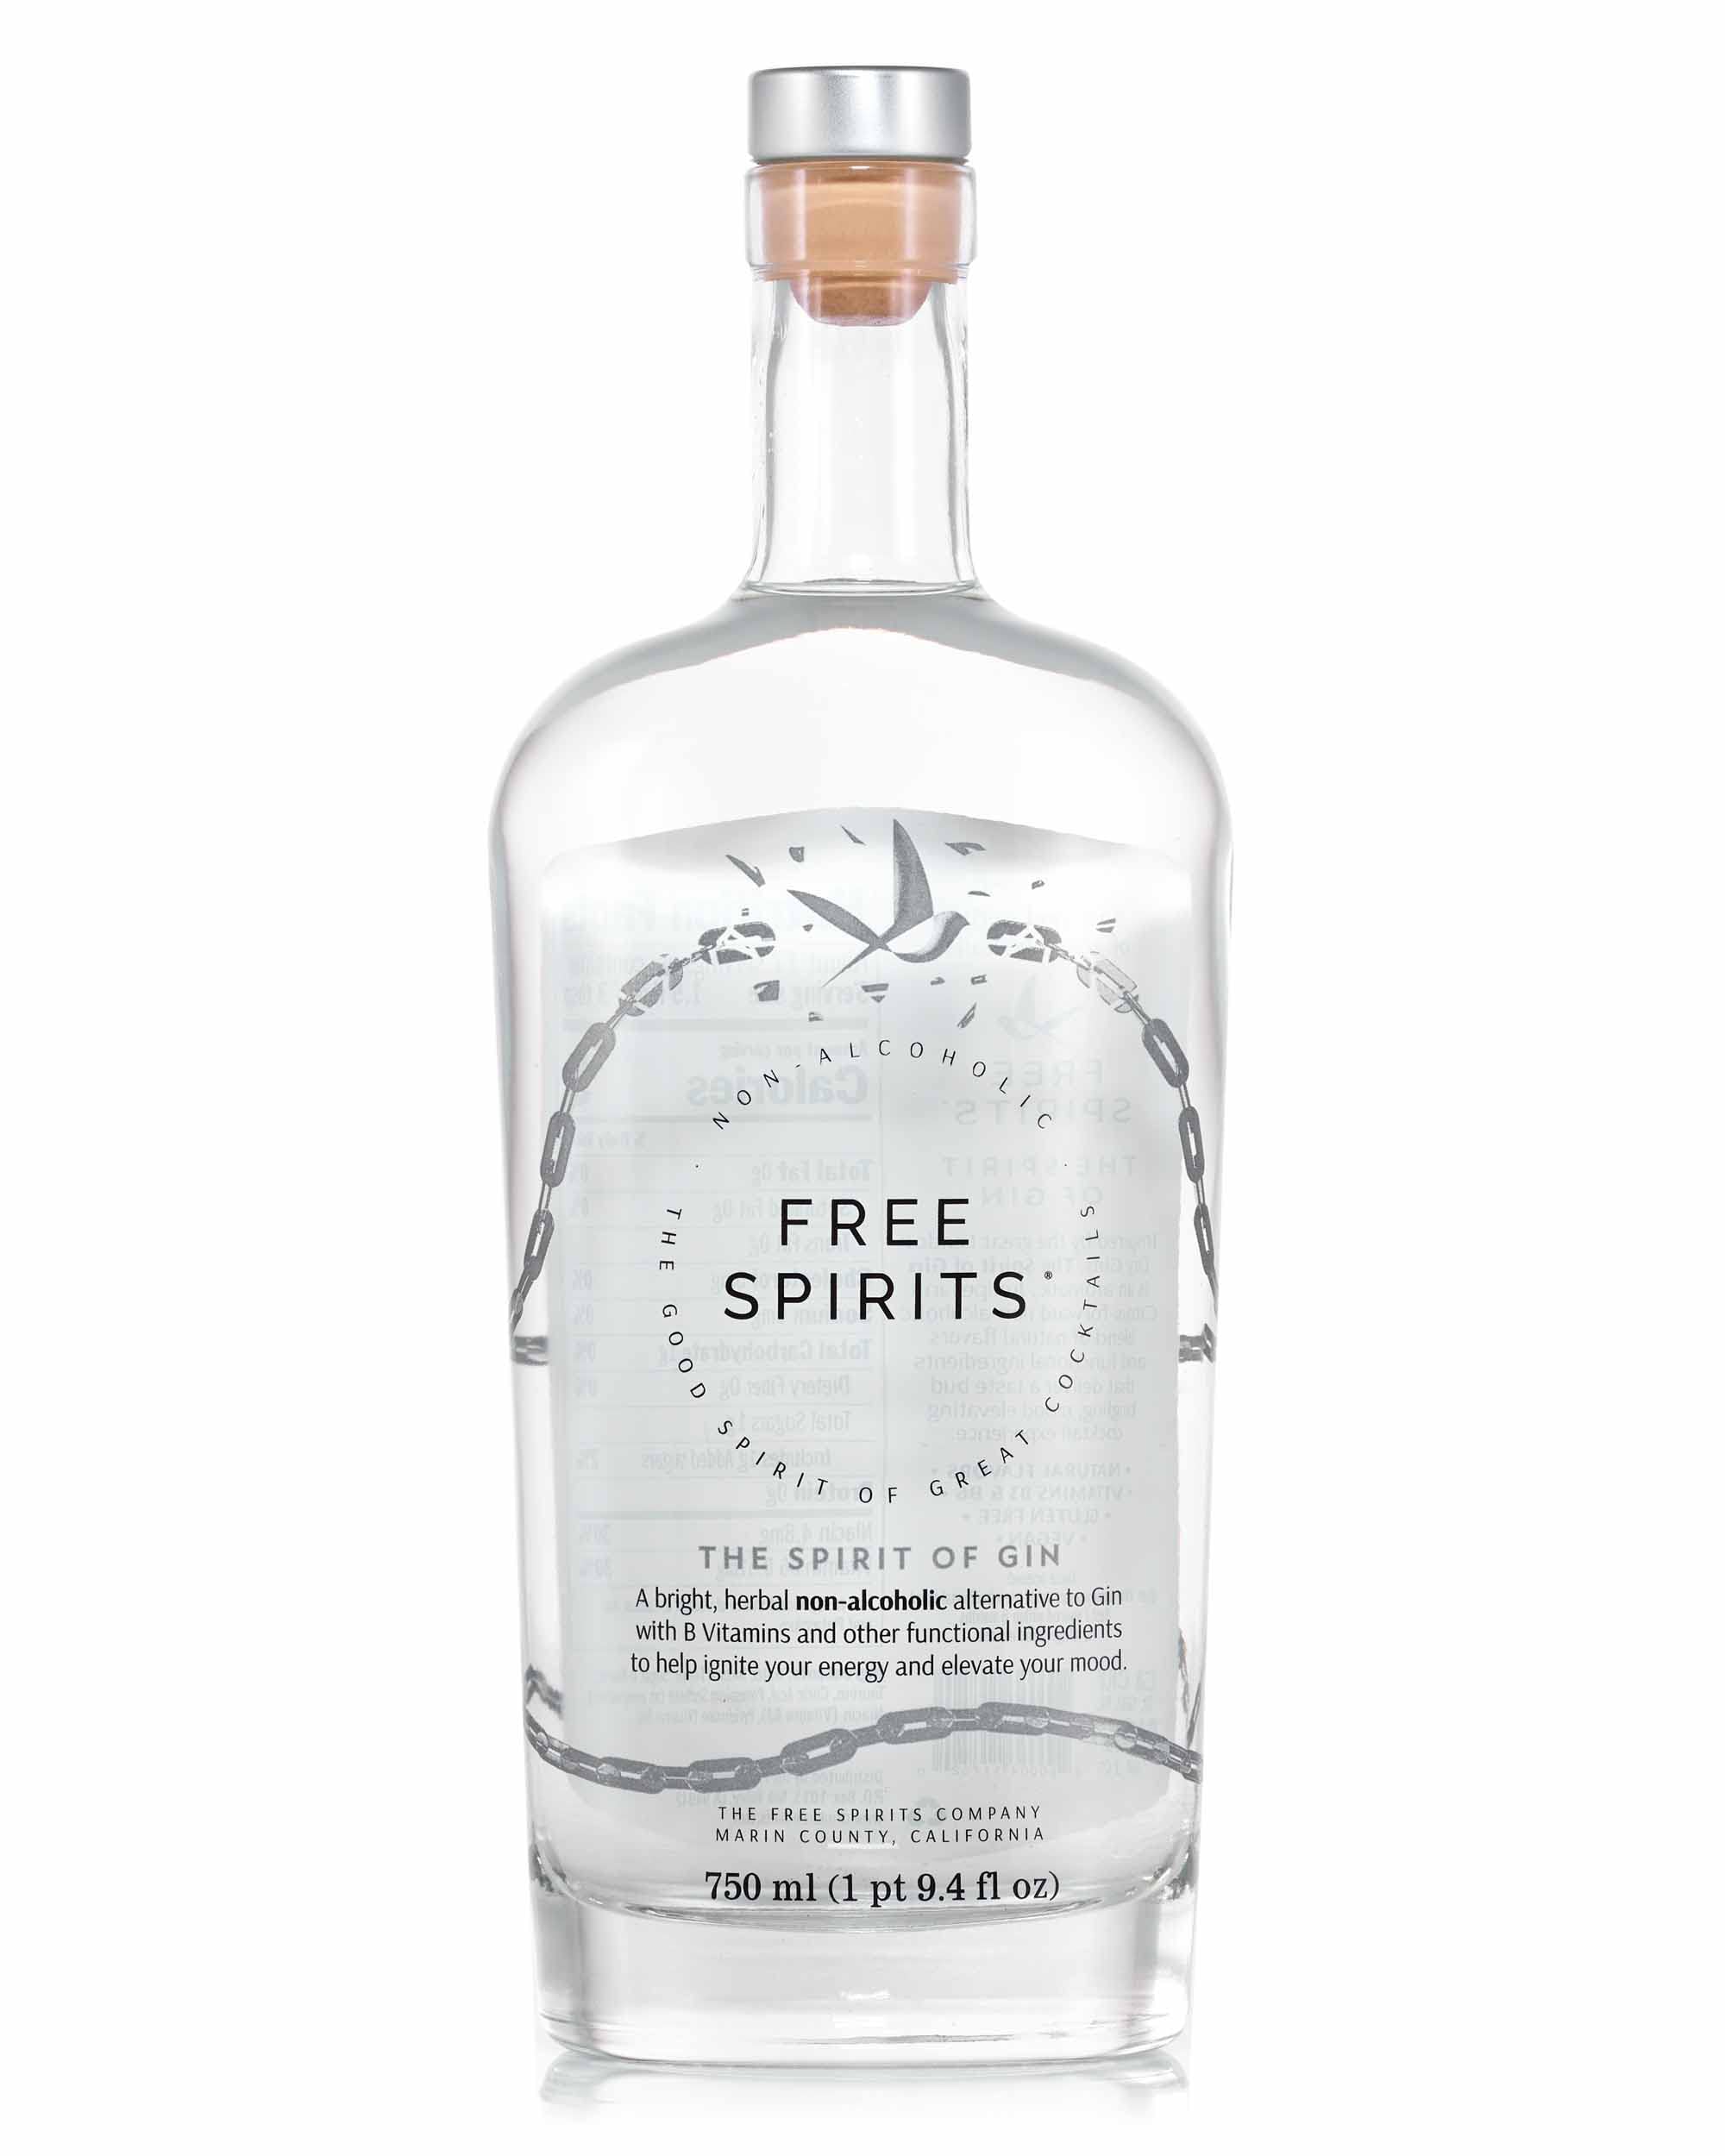 The Spirit of Gin by FREE SPIRITS